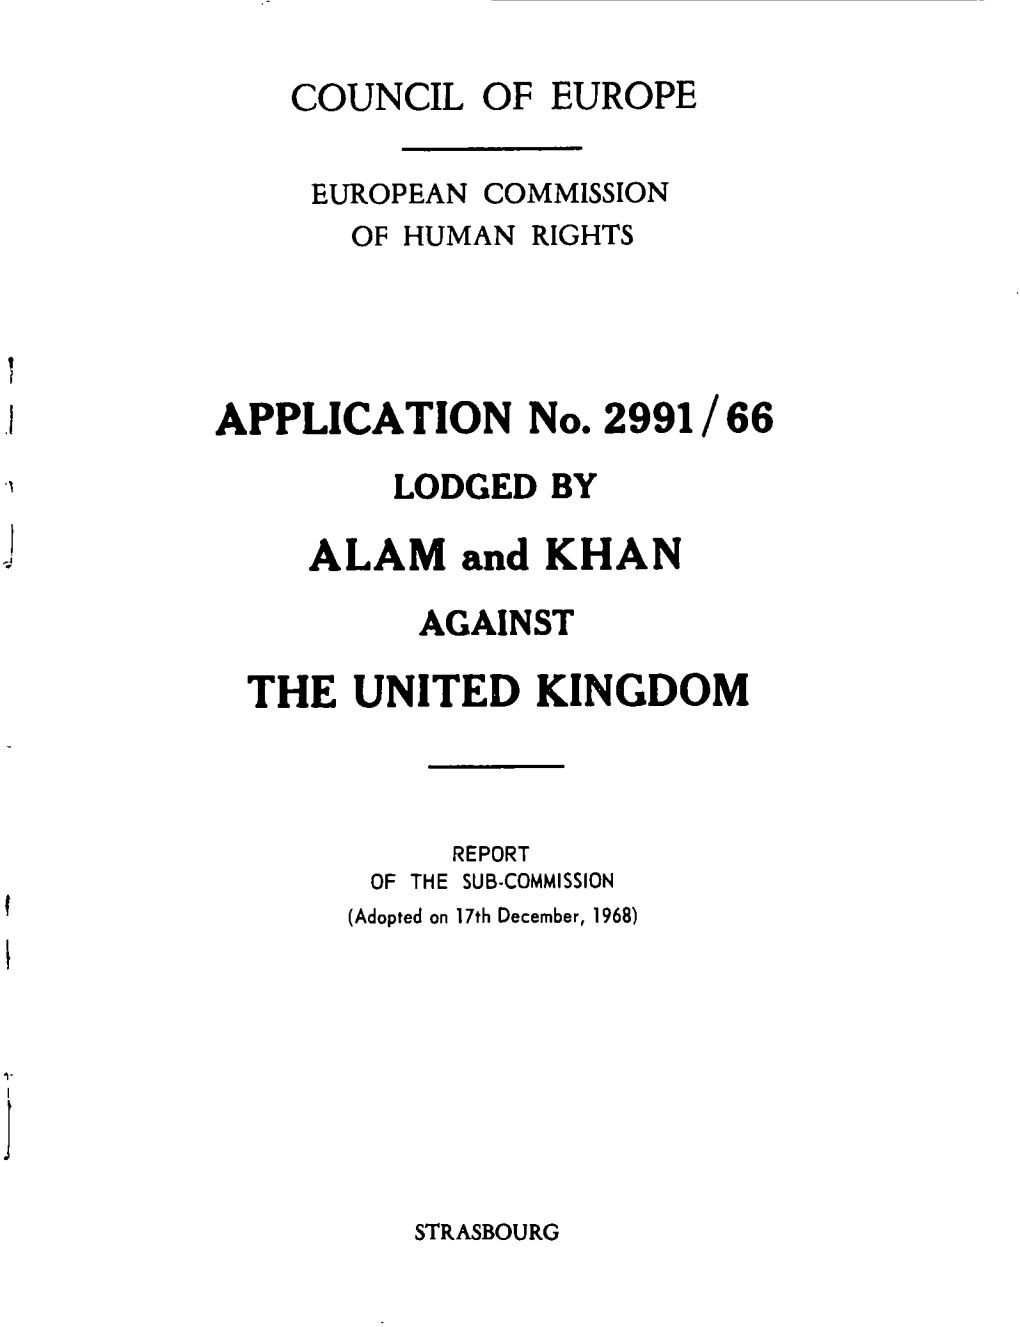 APPLICATION No. 2991 / 6 6 ALAM and KHA N the UNITED KINGDOM